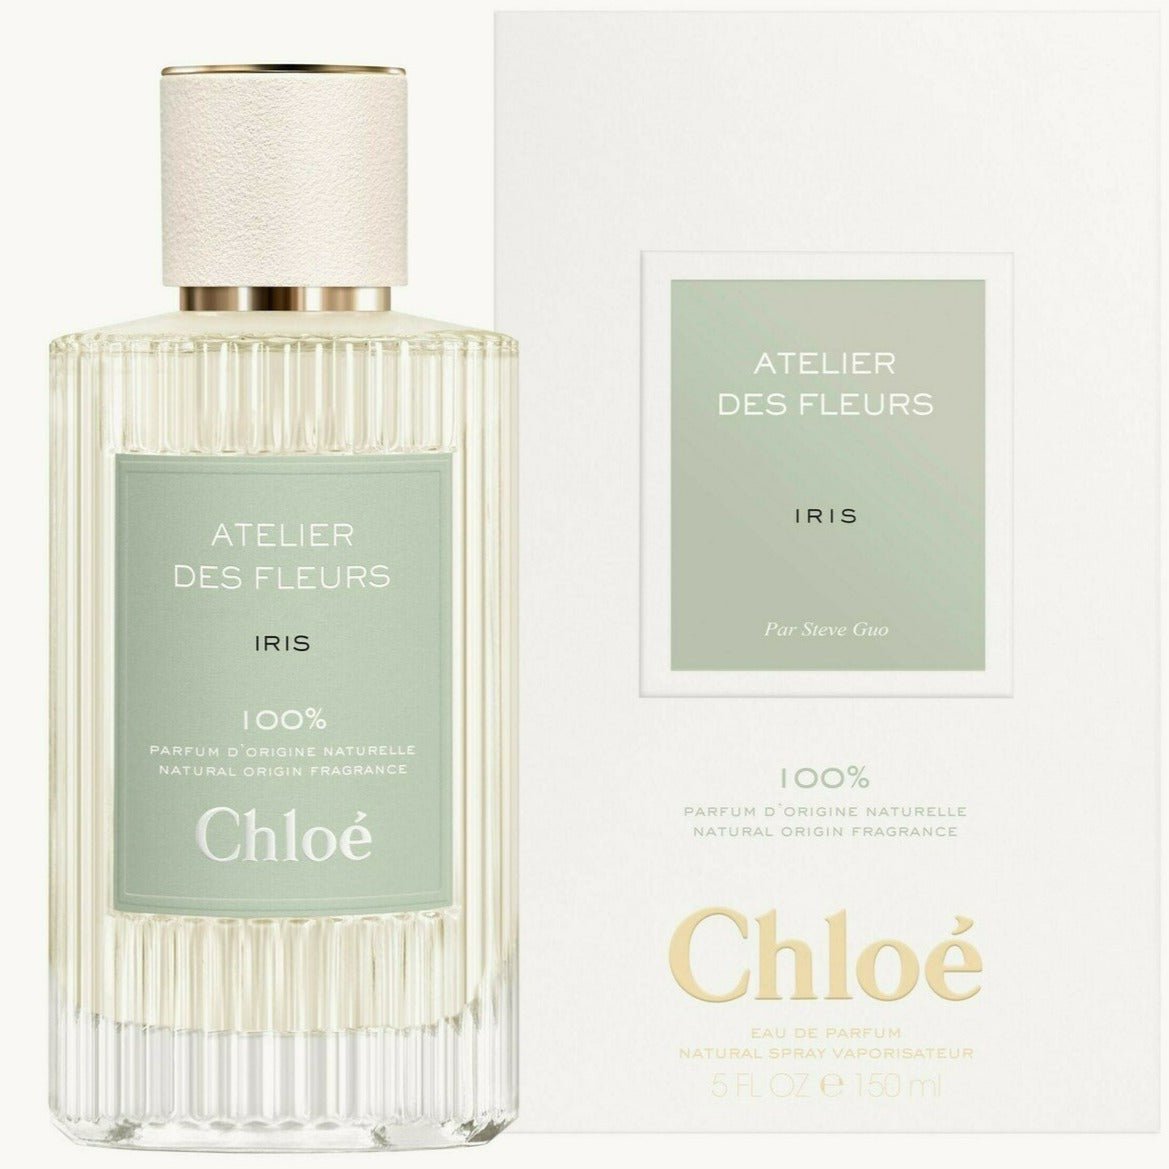 Chloe Atelier Des Fleurs Iris EDP | My Perfume Shop Australia